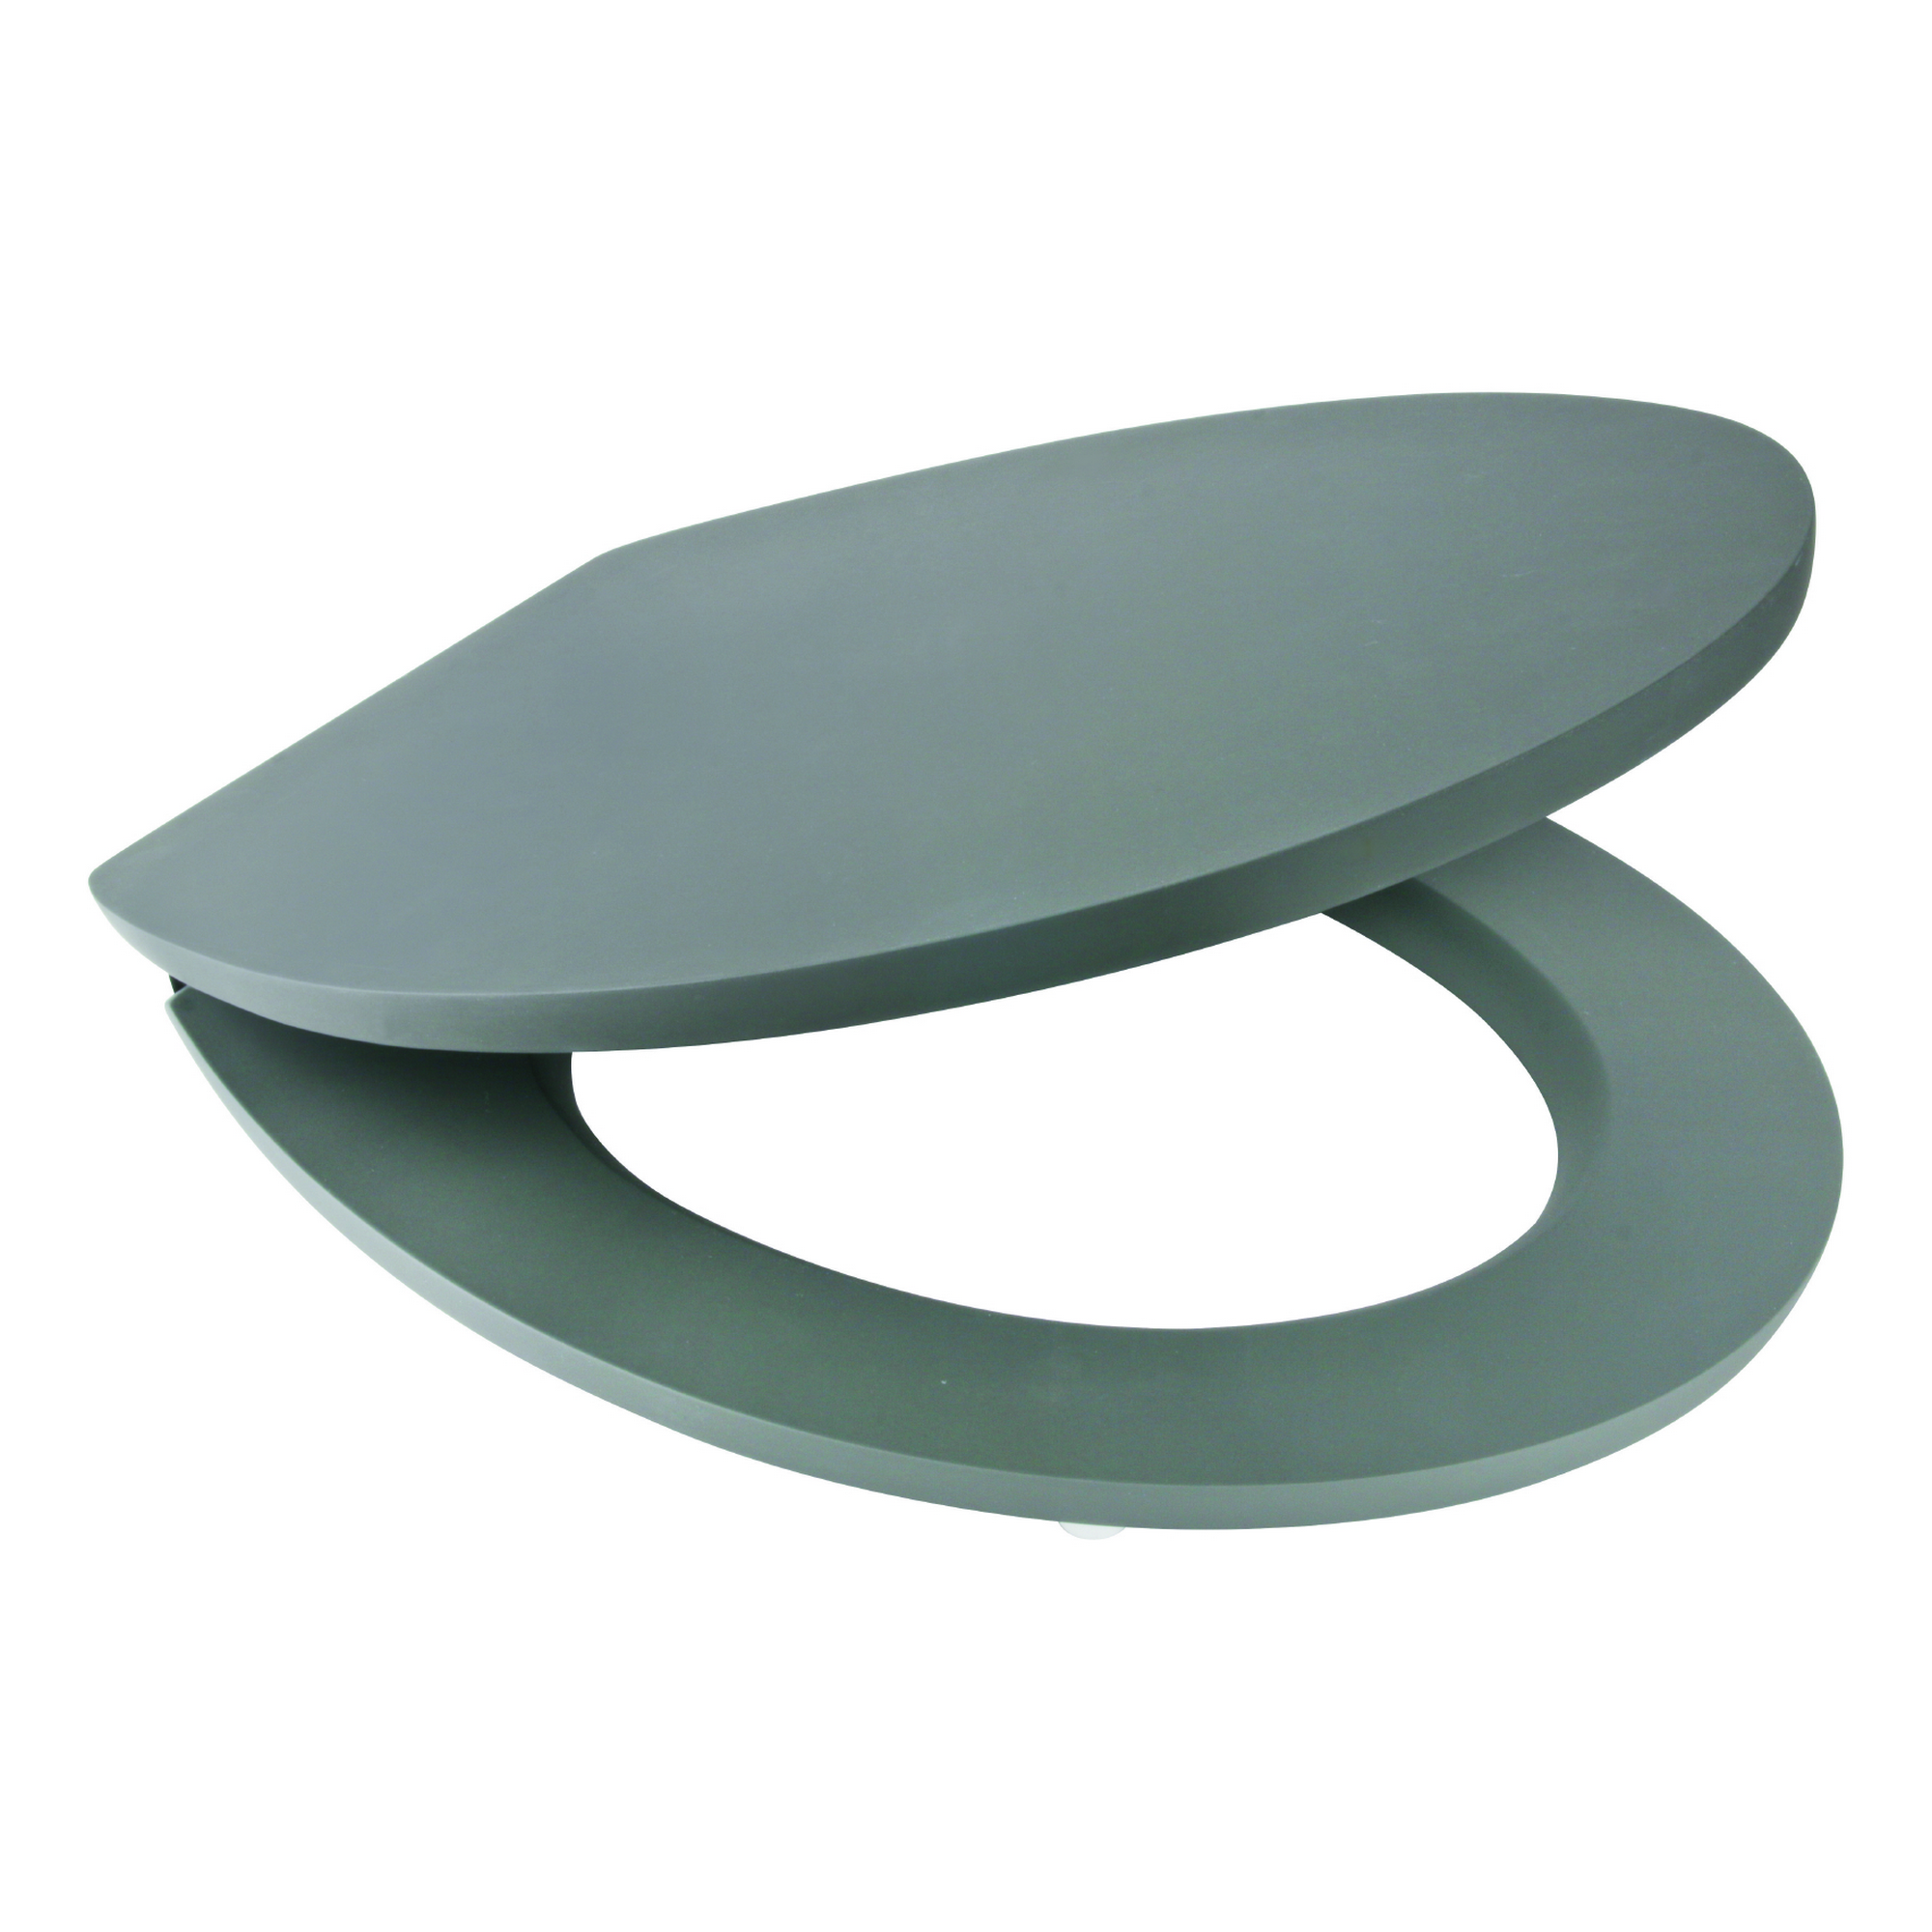 Image of WC-Sitz 'Soft Touch' grau mit Soft Touch Oberfläche